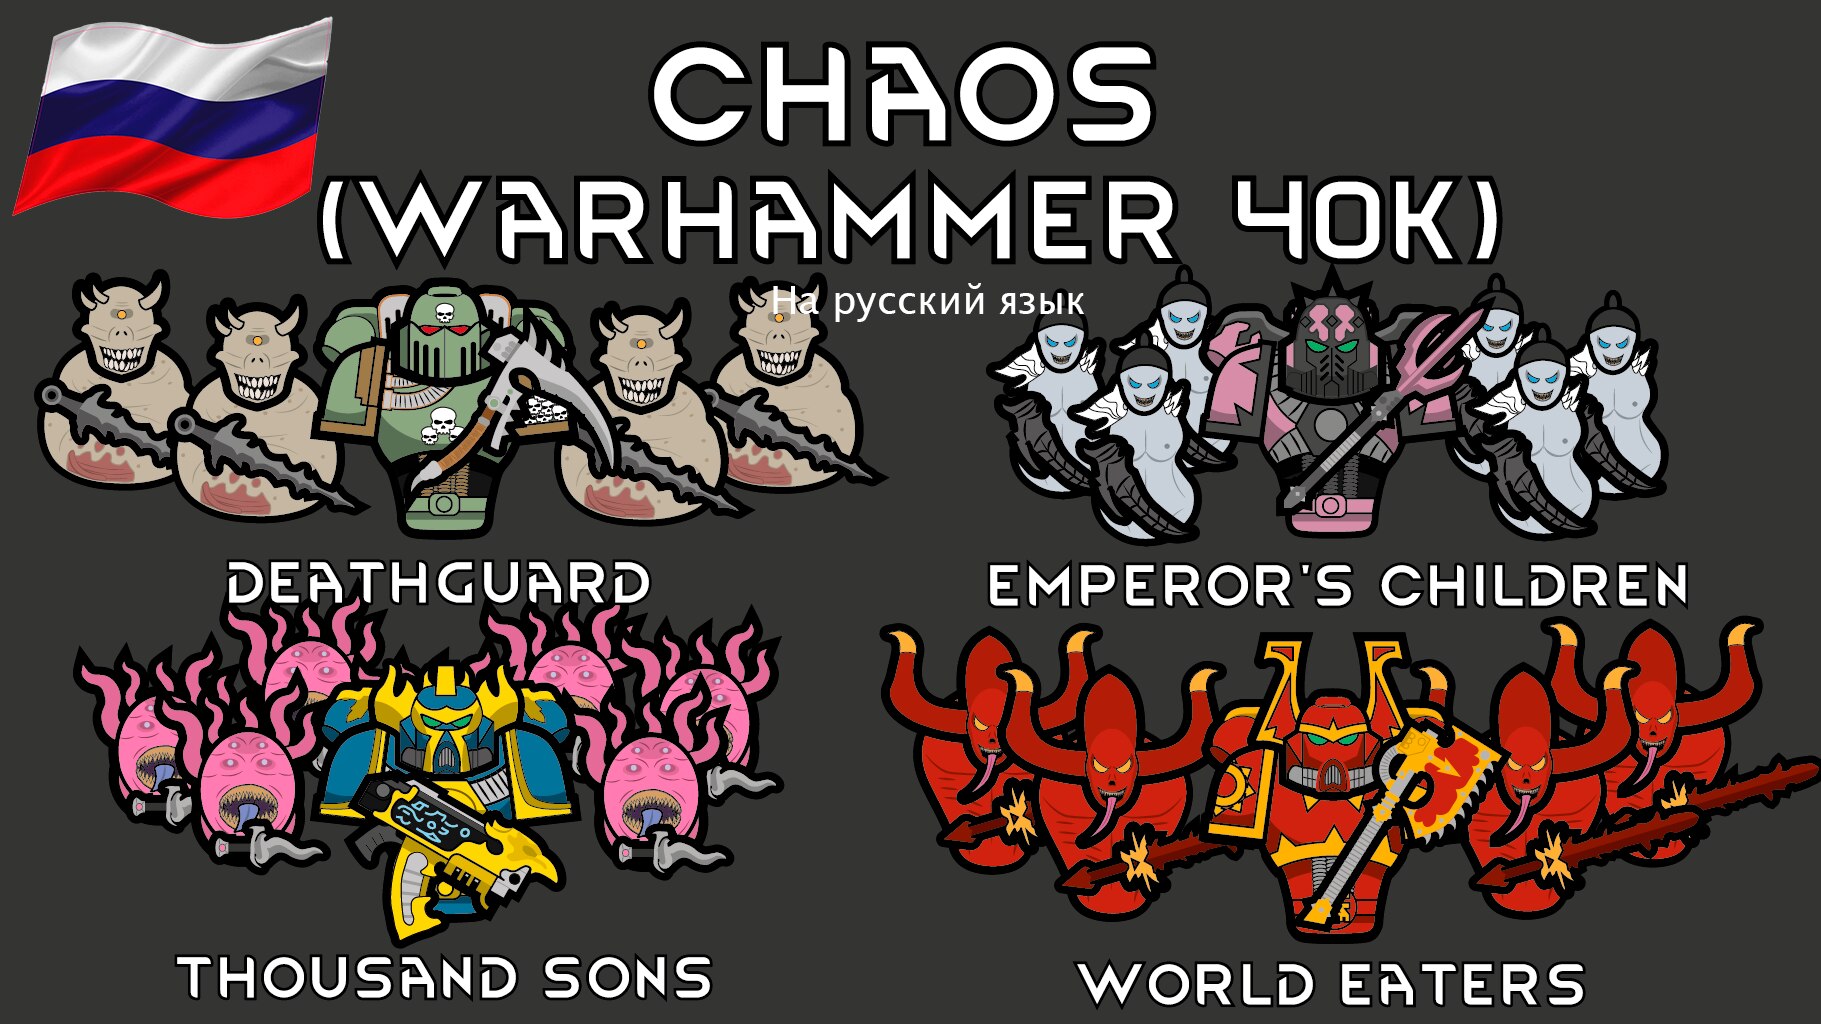 Chaos 0 - Skymods